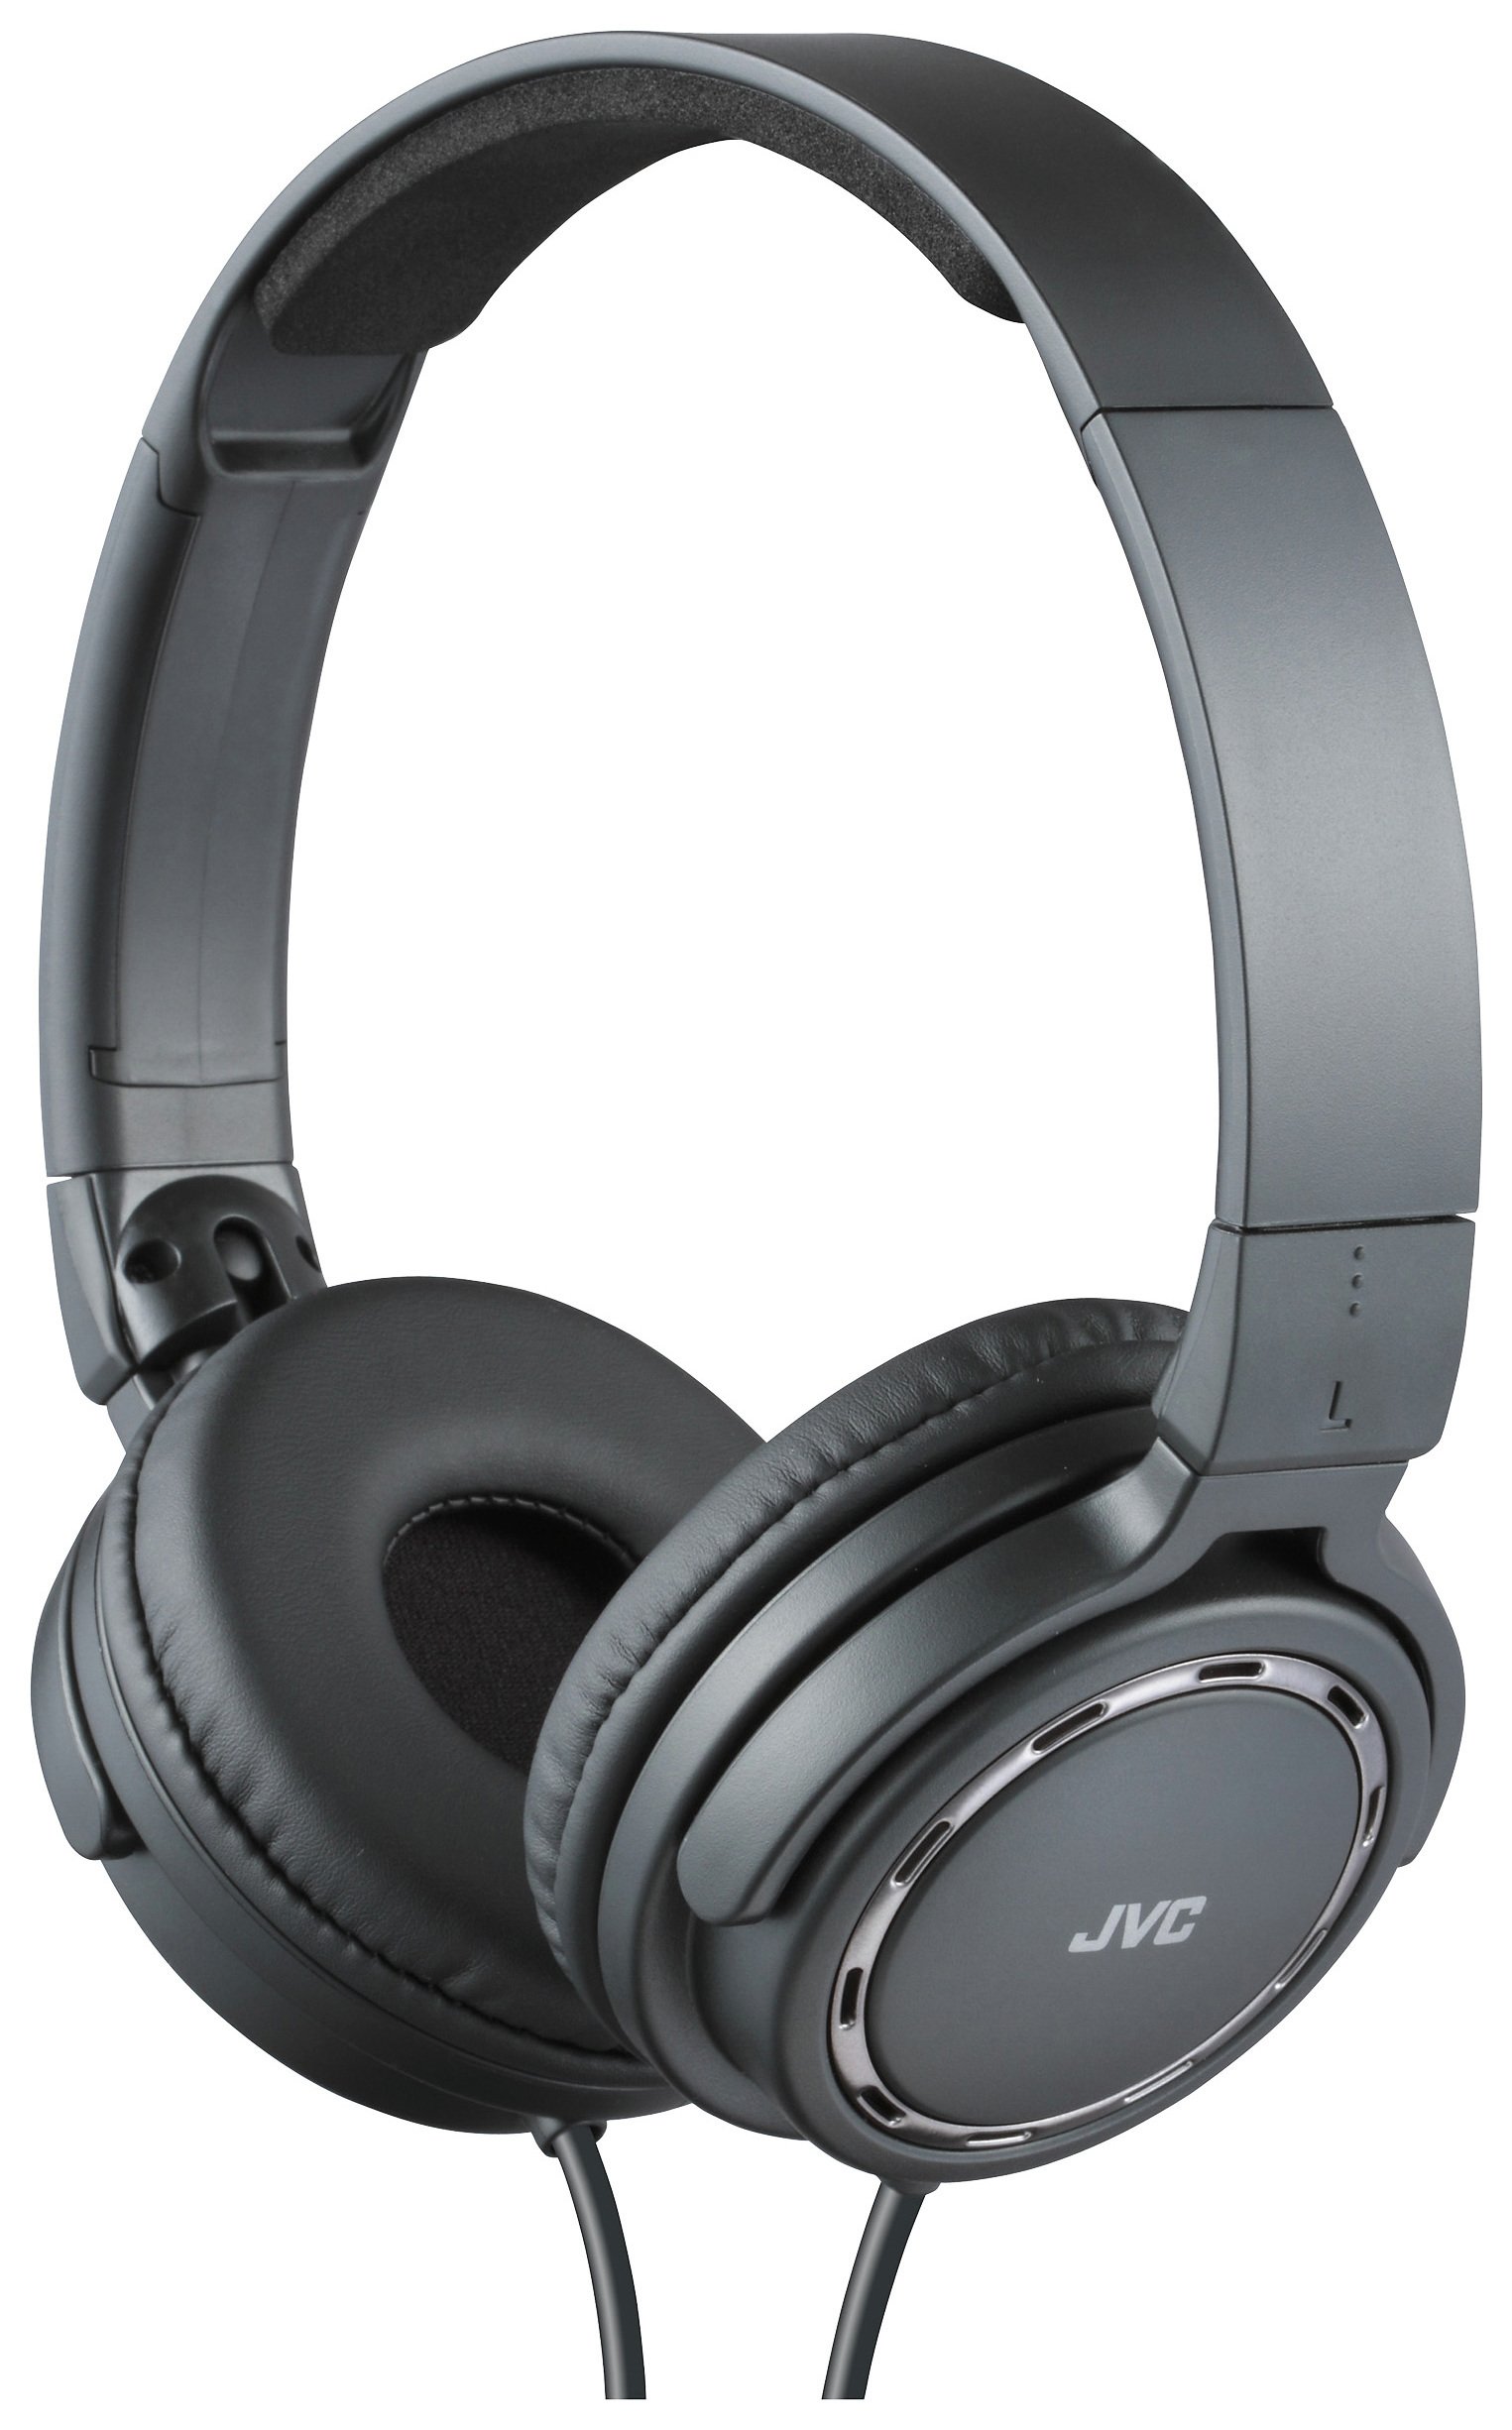 JVC - HA-SR520 On-Ear Headphones Review